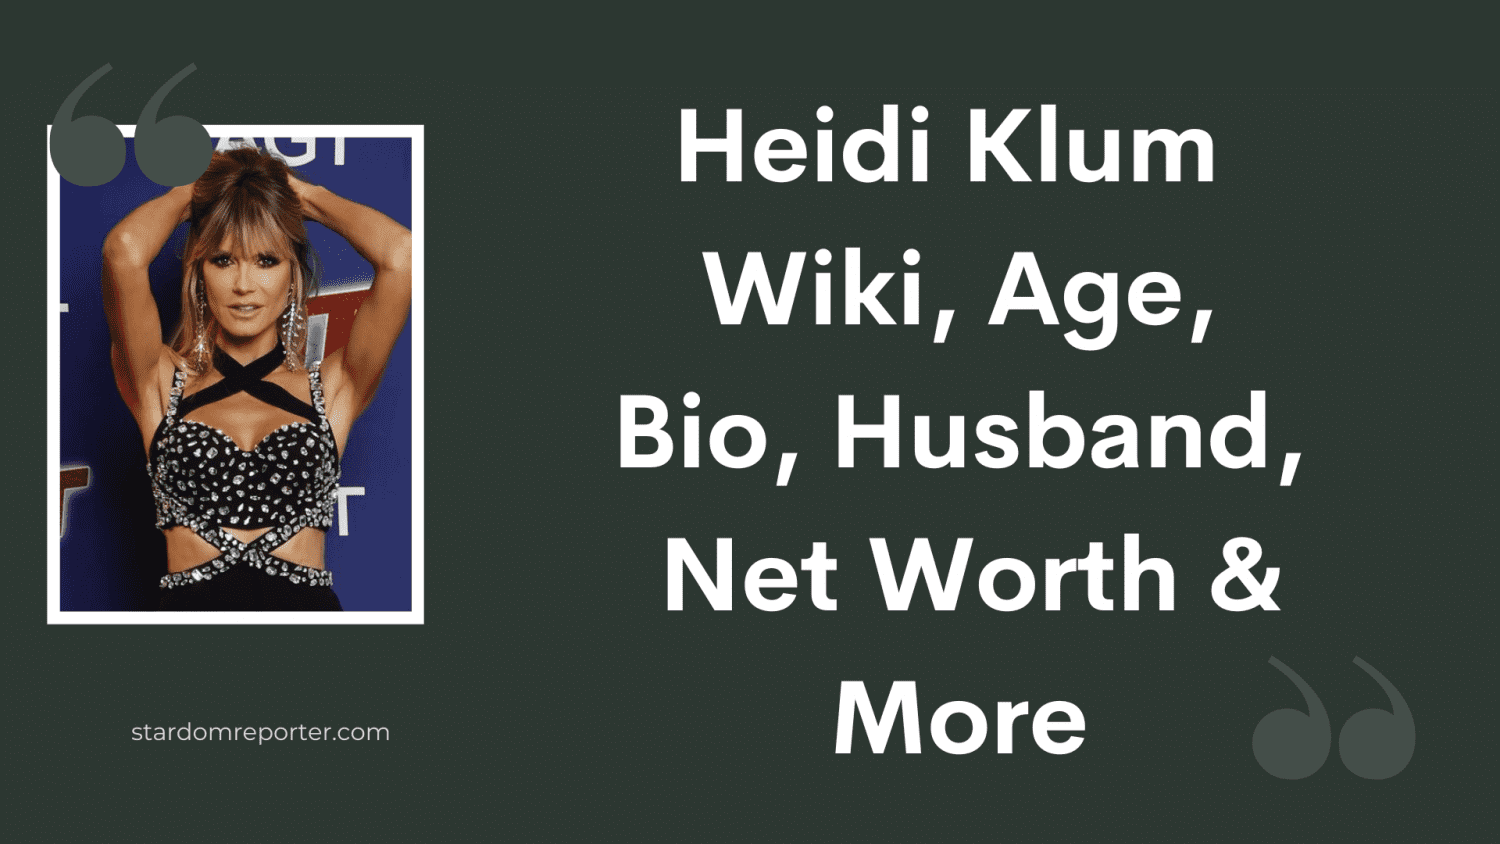 Heidi Klum Wiki, Age, Bio, Husband, Net Worth & More - 17